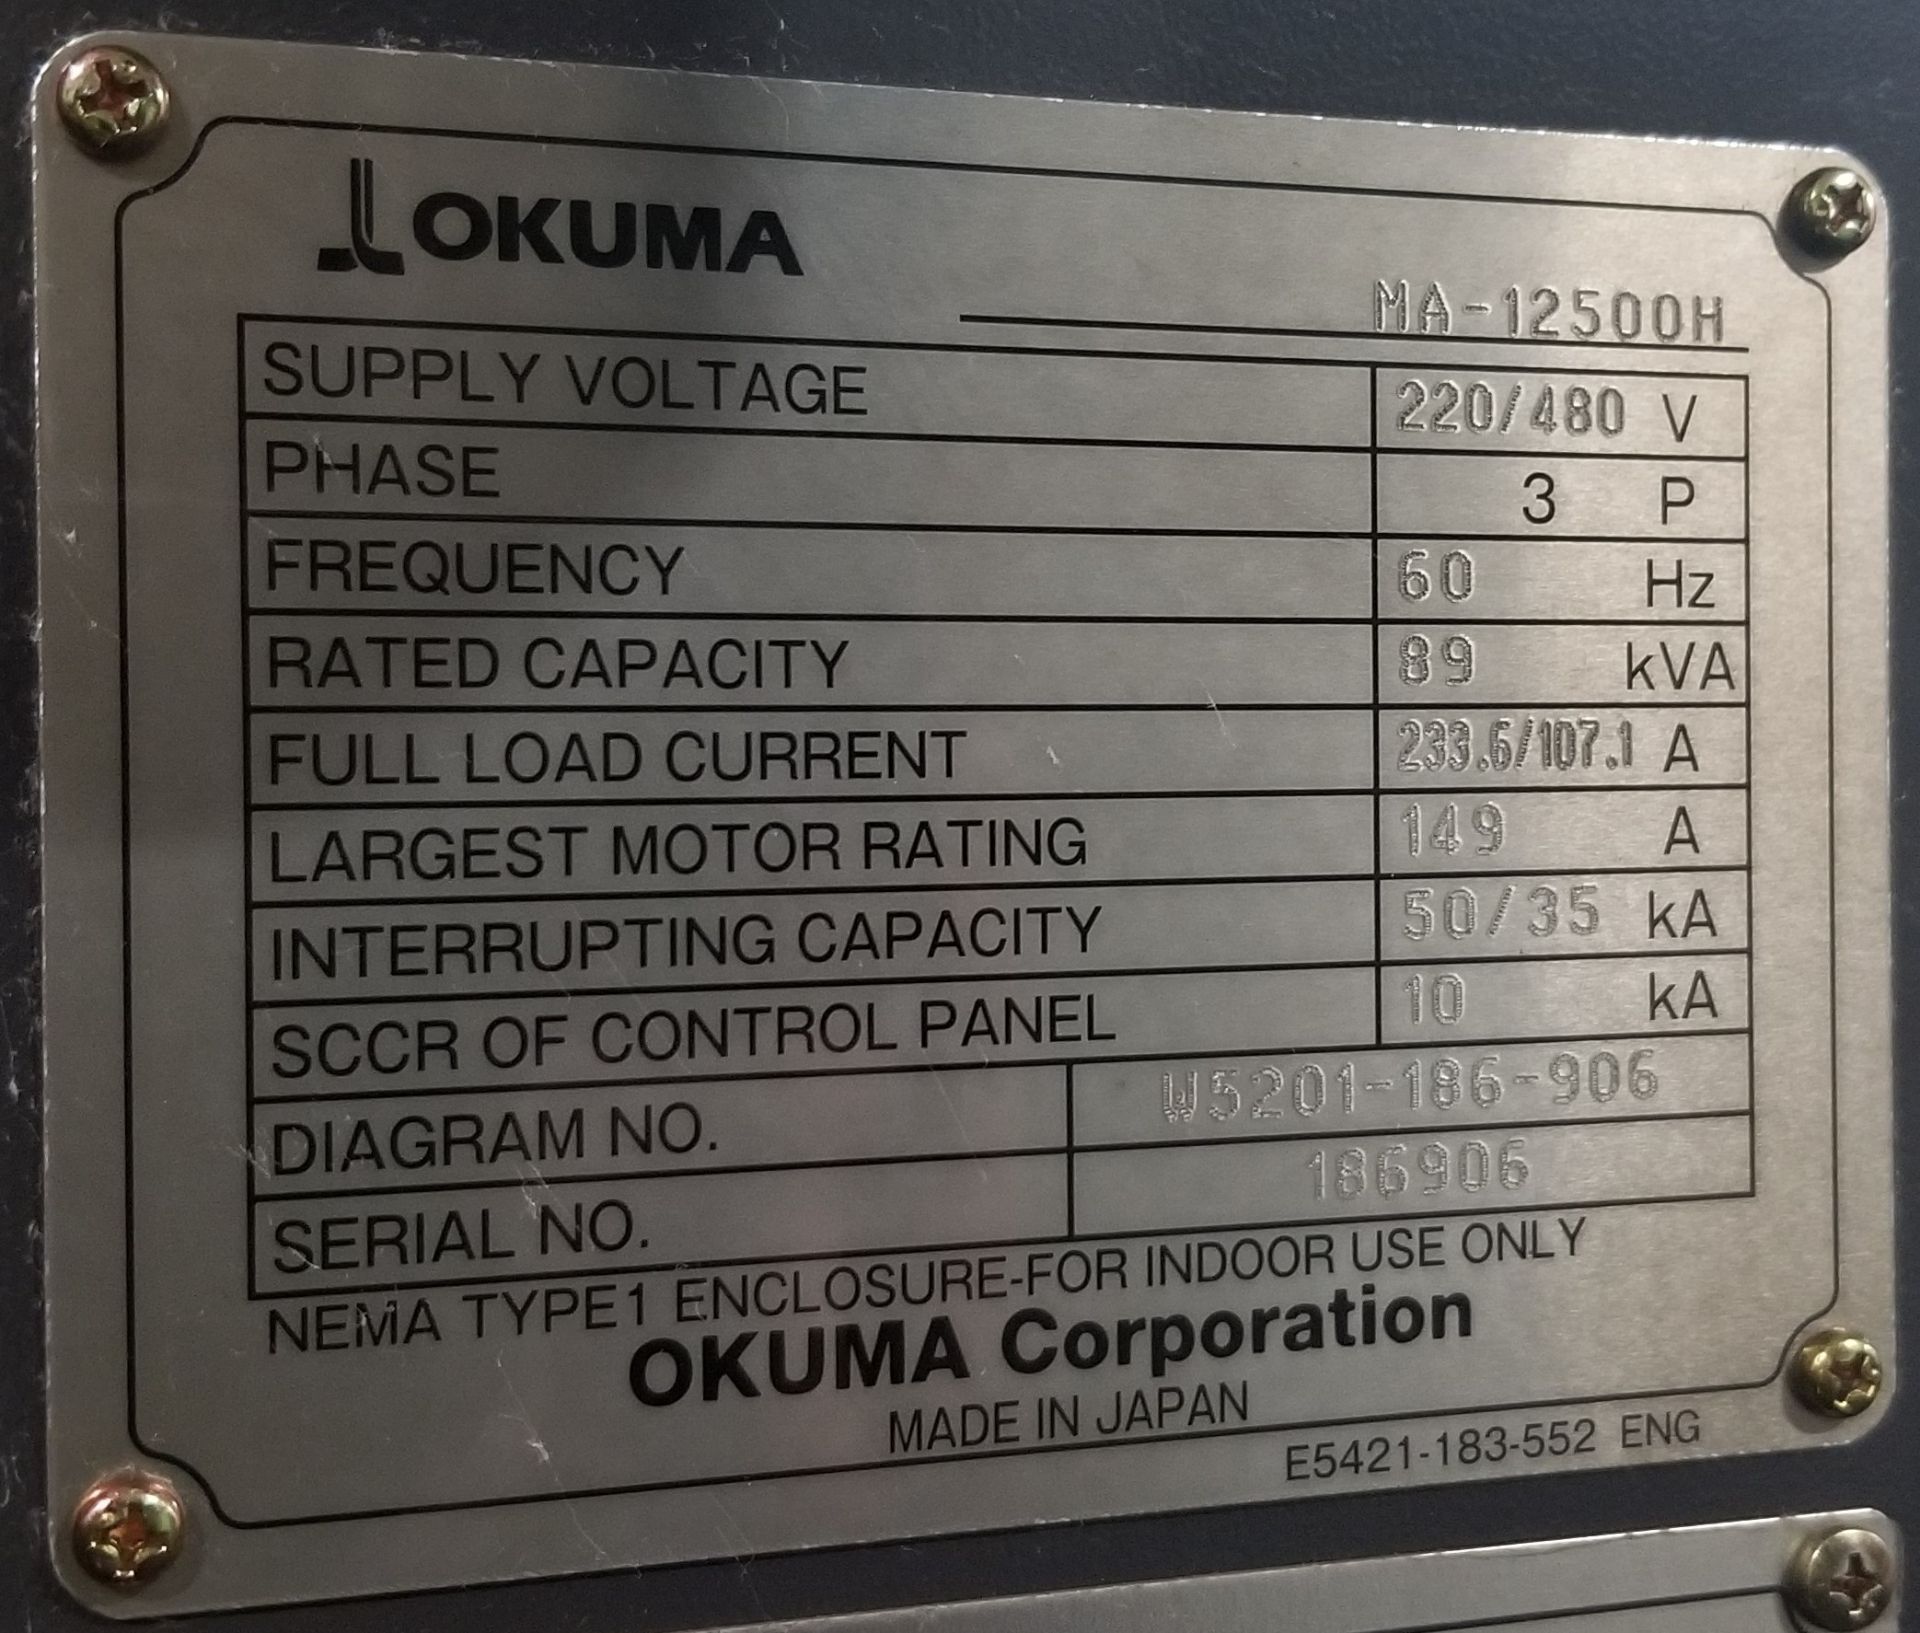 OKUMA (2016) MA-12500H SPACE CENTER TWIN PALLET CNC HORIZONTAL MACHINING CENTER WITH OKUMA - Image 13 of 14